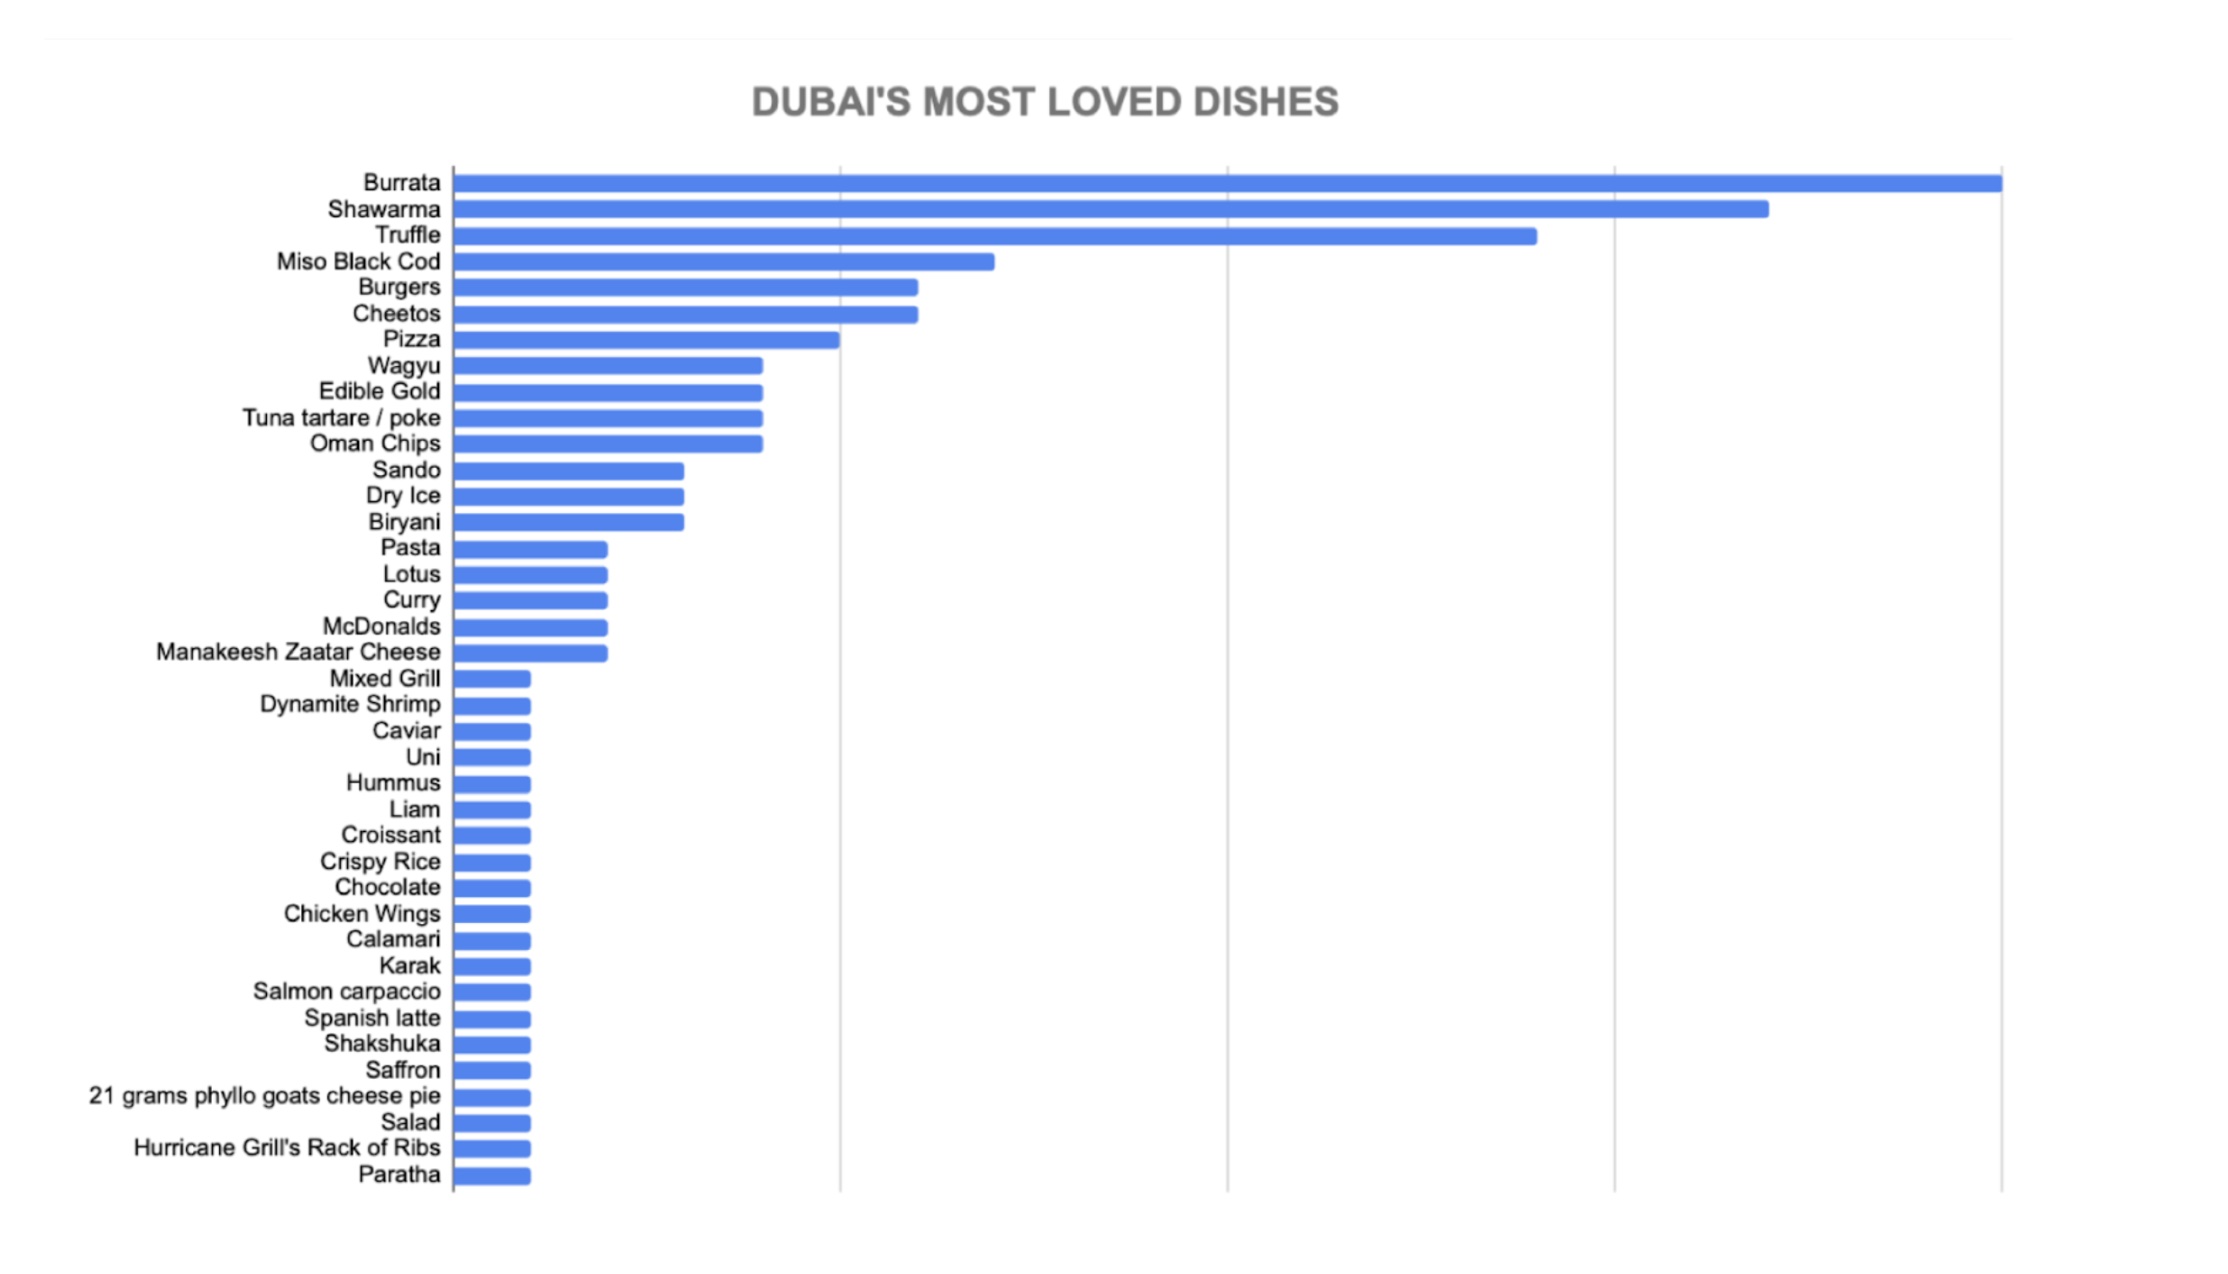 Dubai's most loved dish